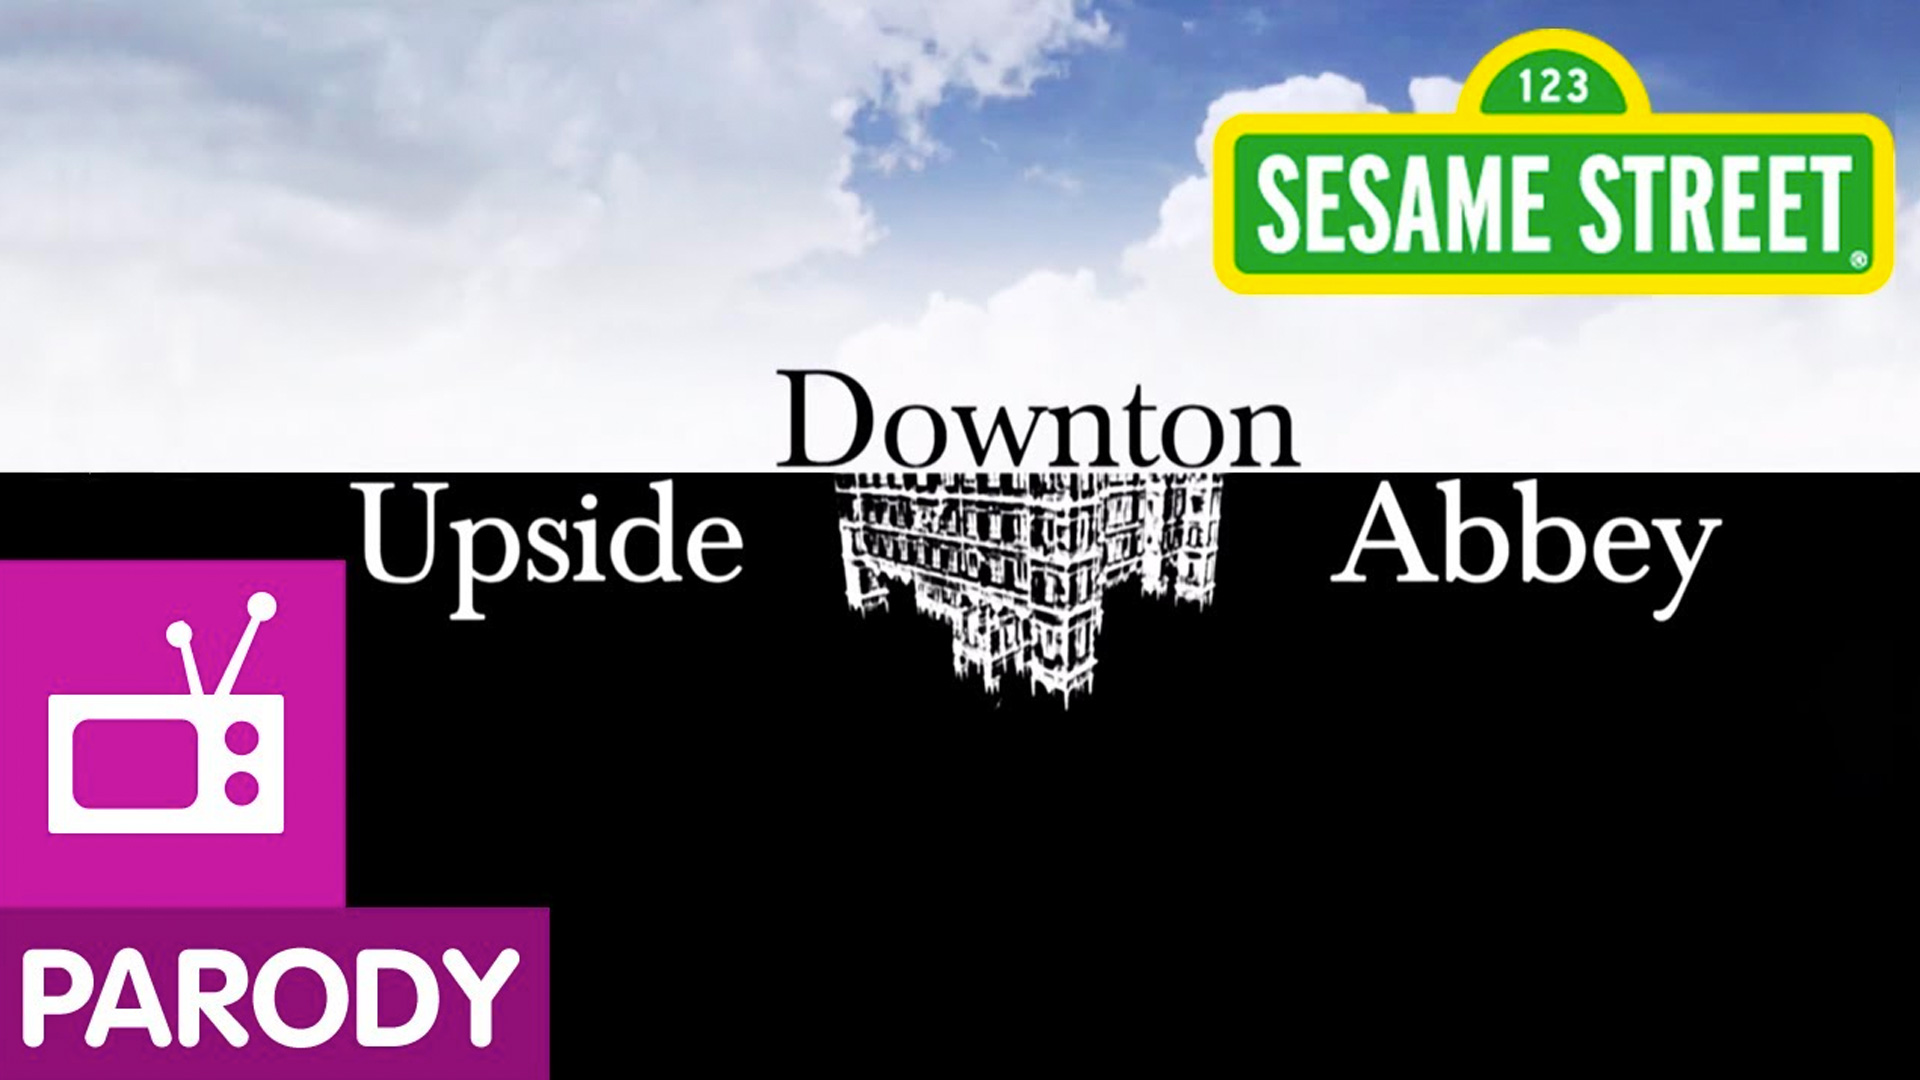 Upside Downton Abbey